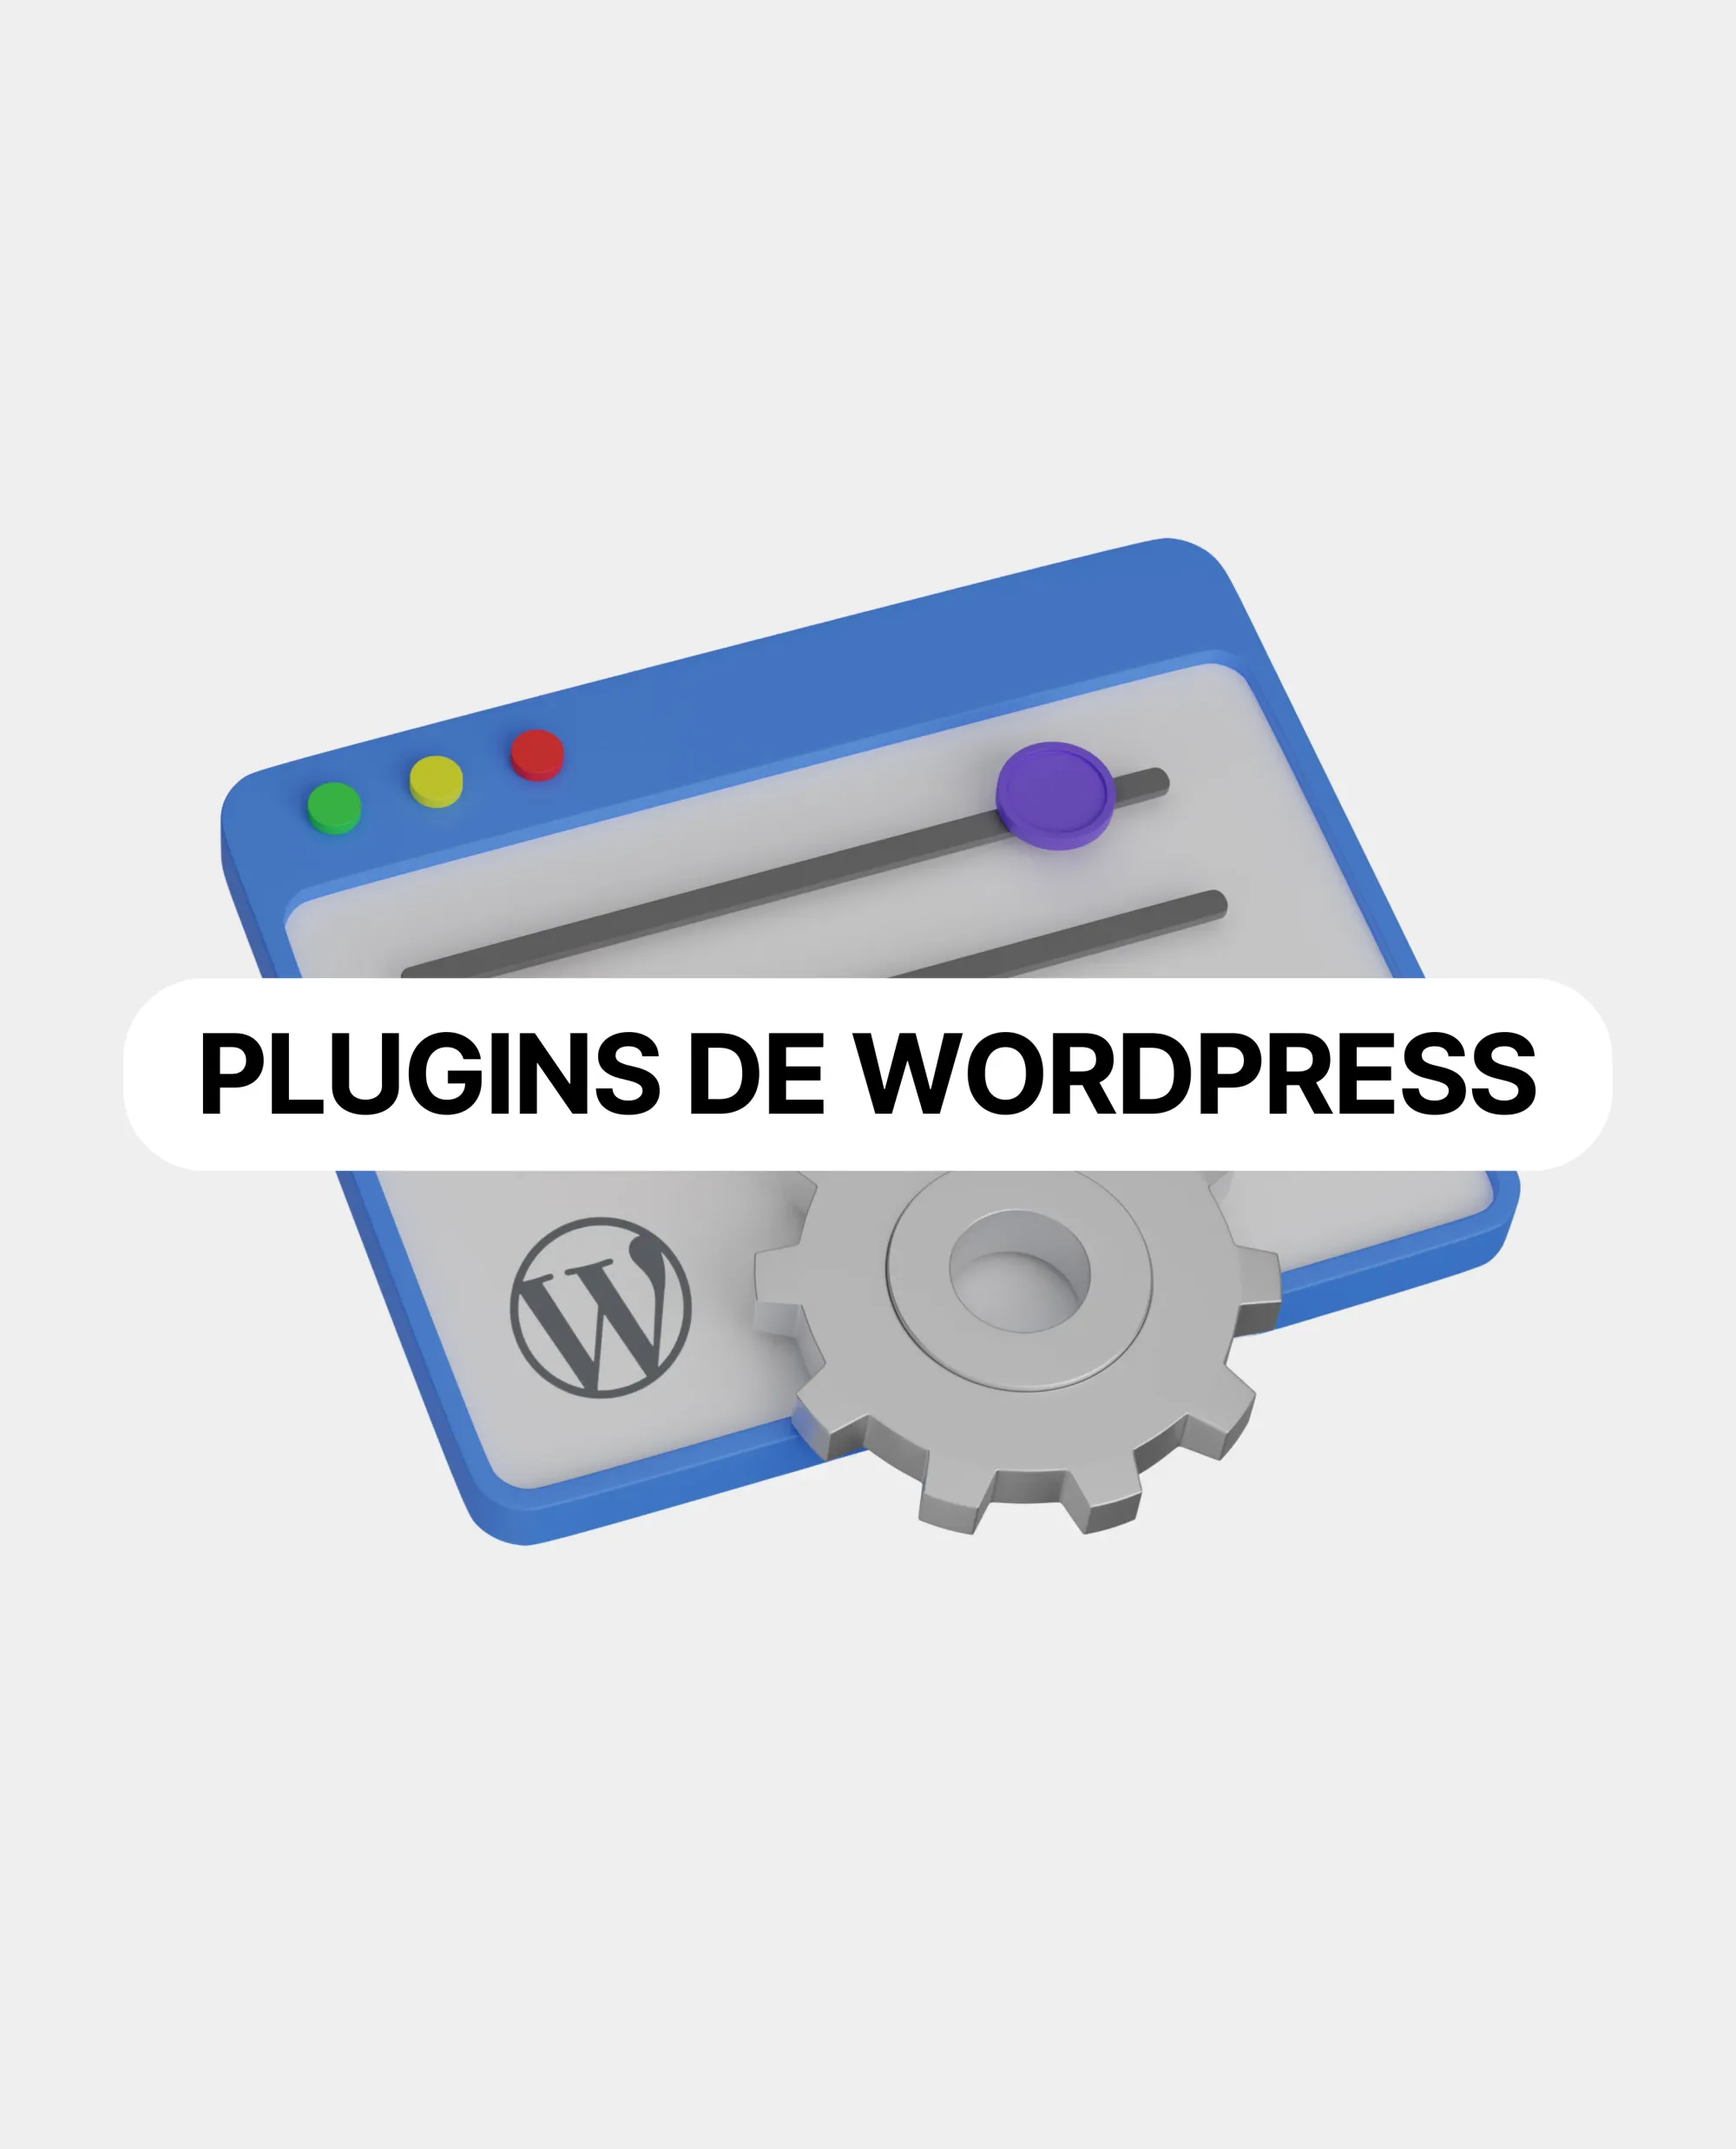 Plugins de WordPress: modelo de negocio